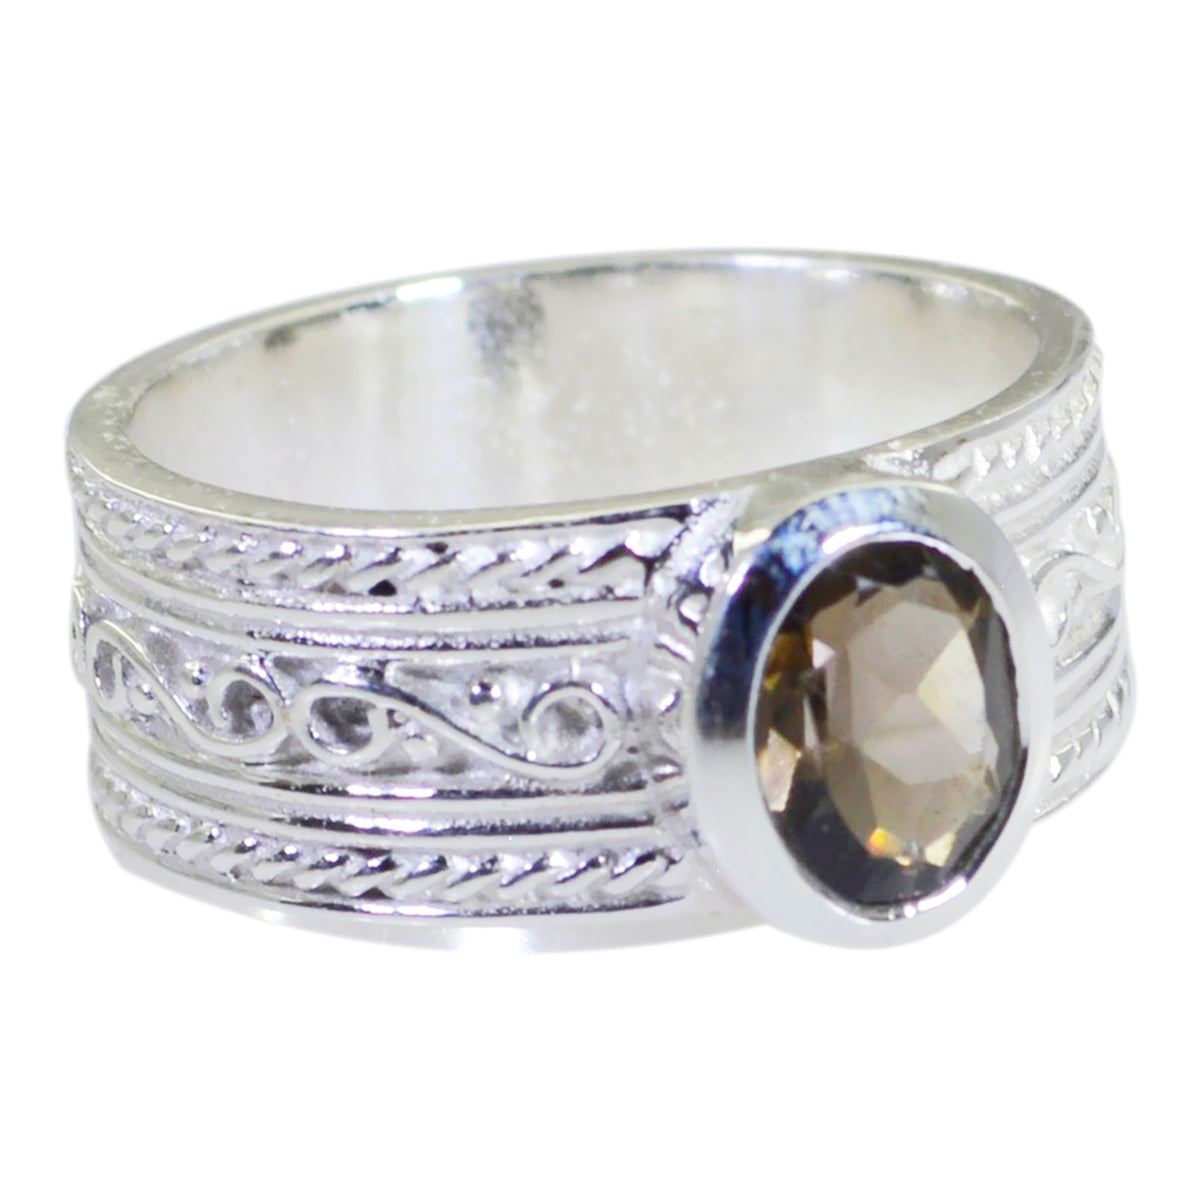 Very Nice Stone Smoky Quartz Sterling Silver Ring Jewelry Holder